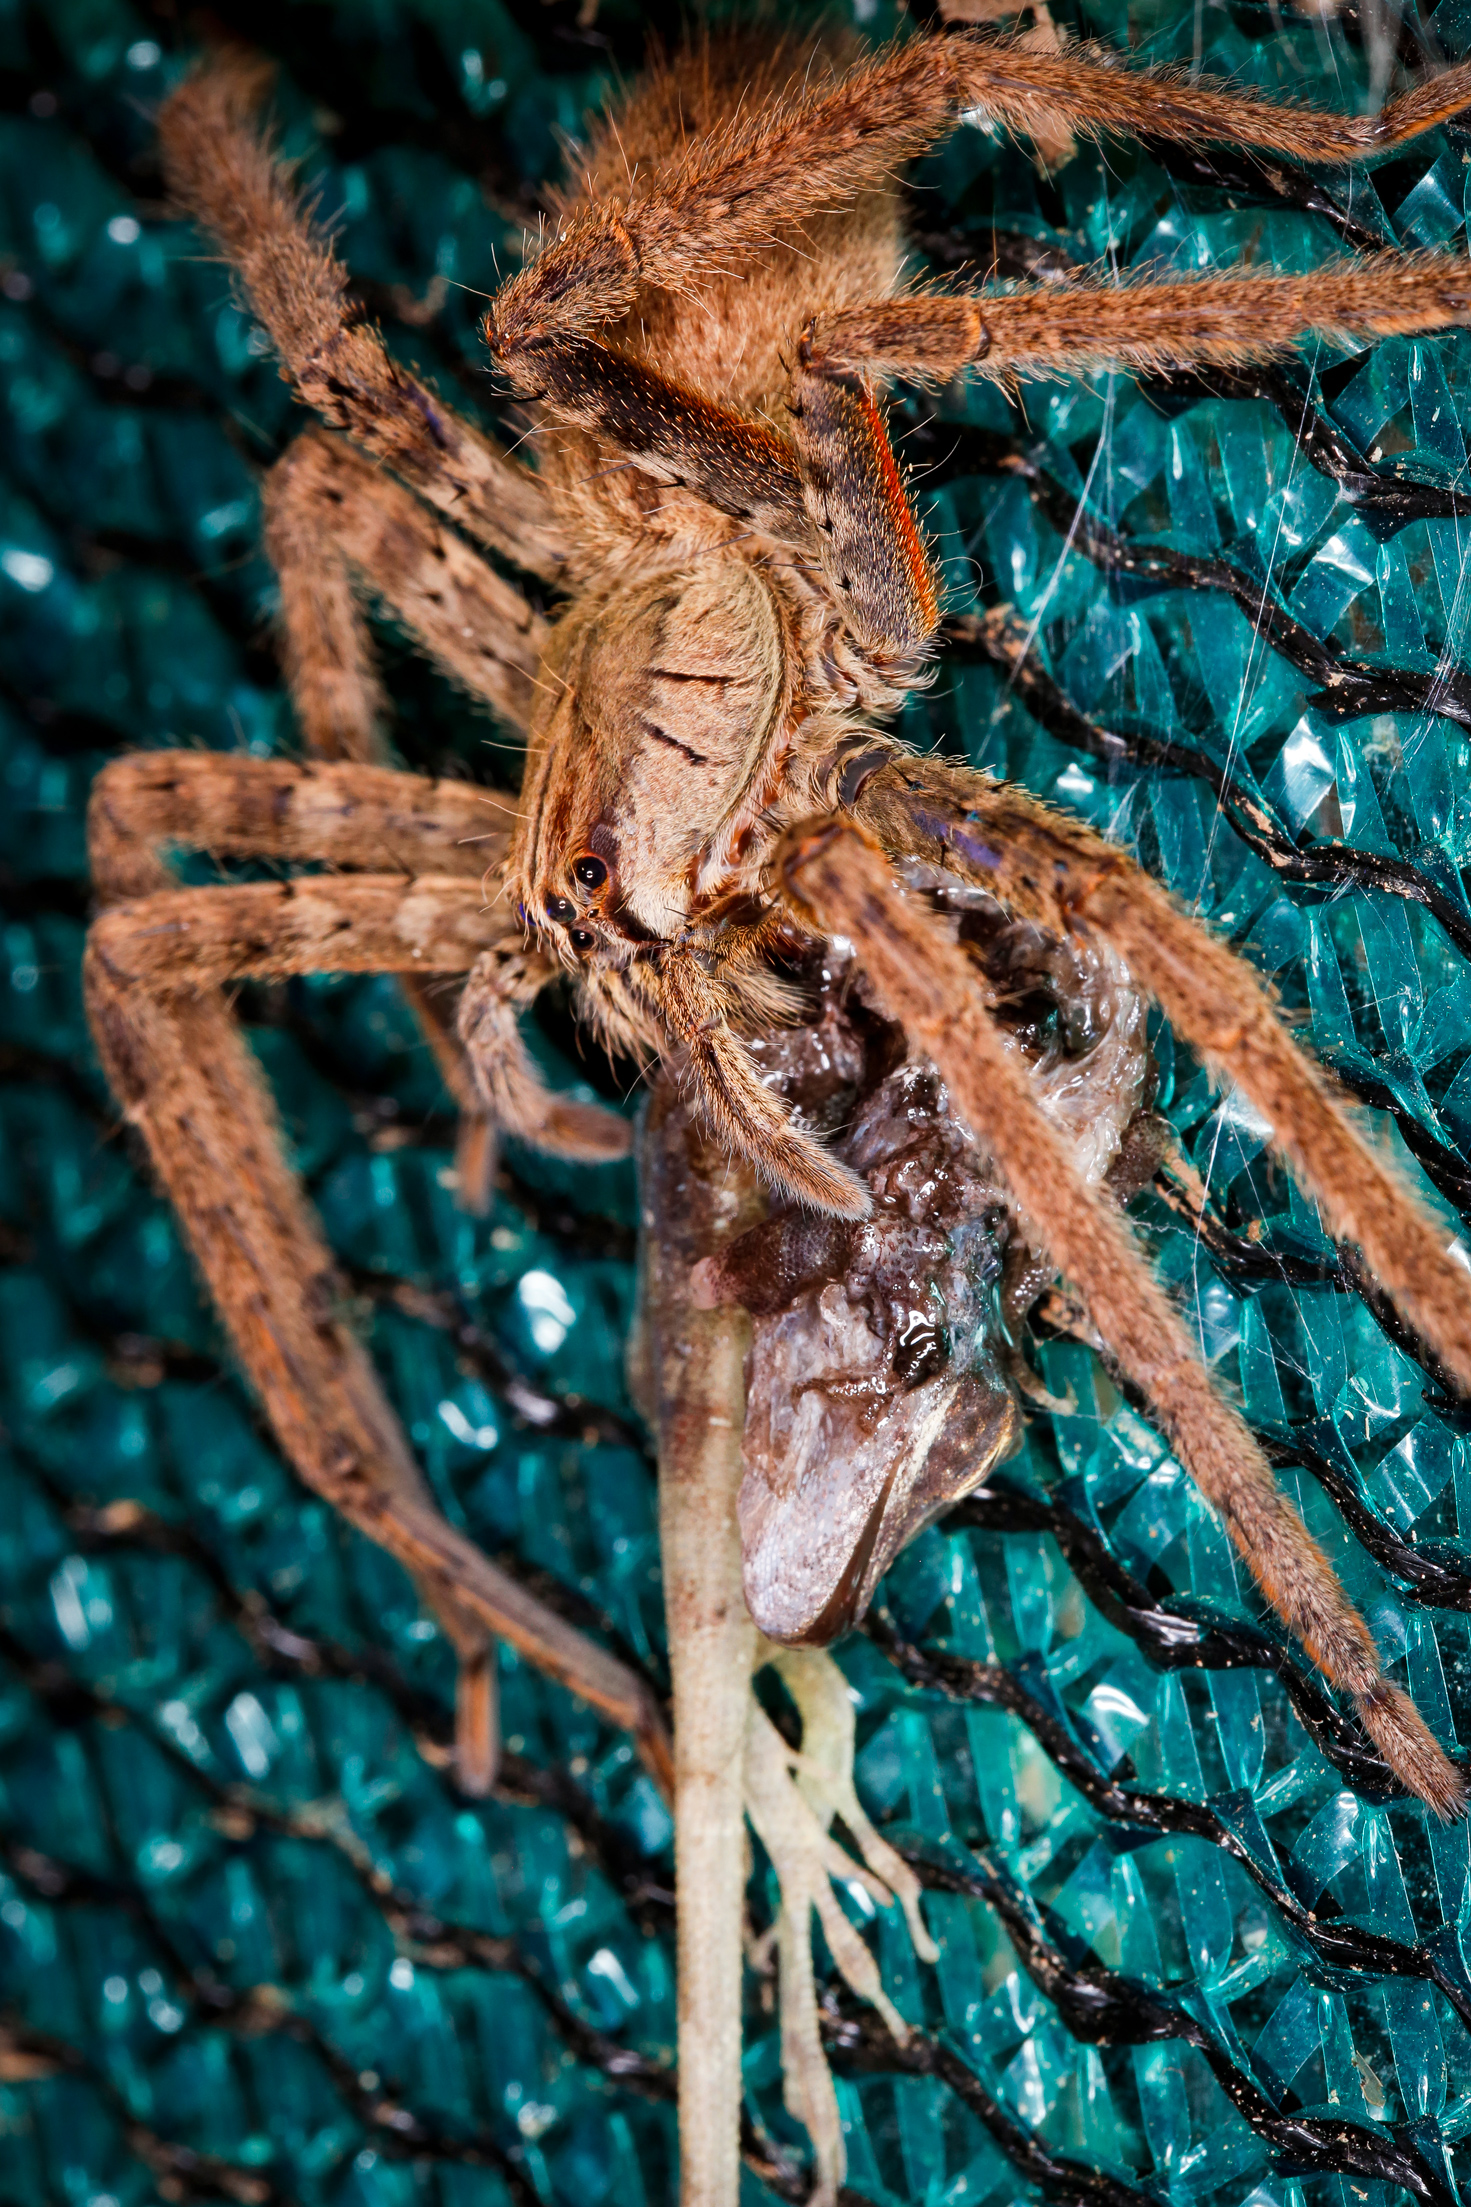 Brazilian Wandering Spider eating Basilisk Lizard